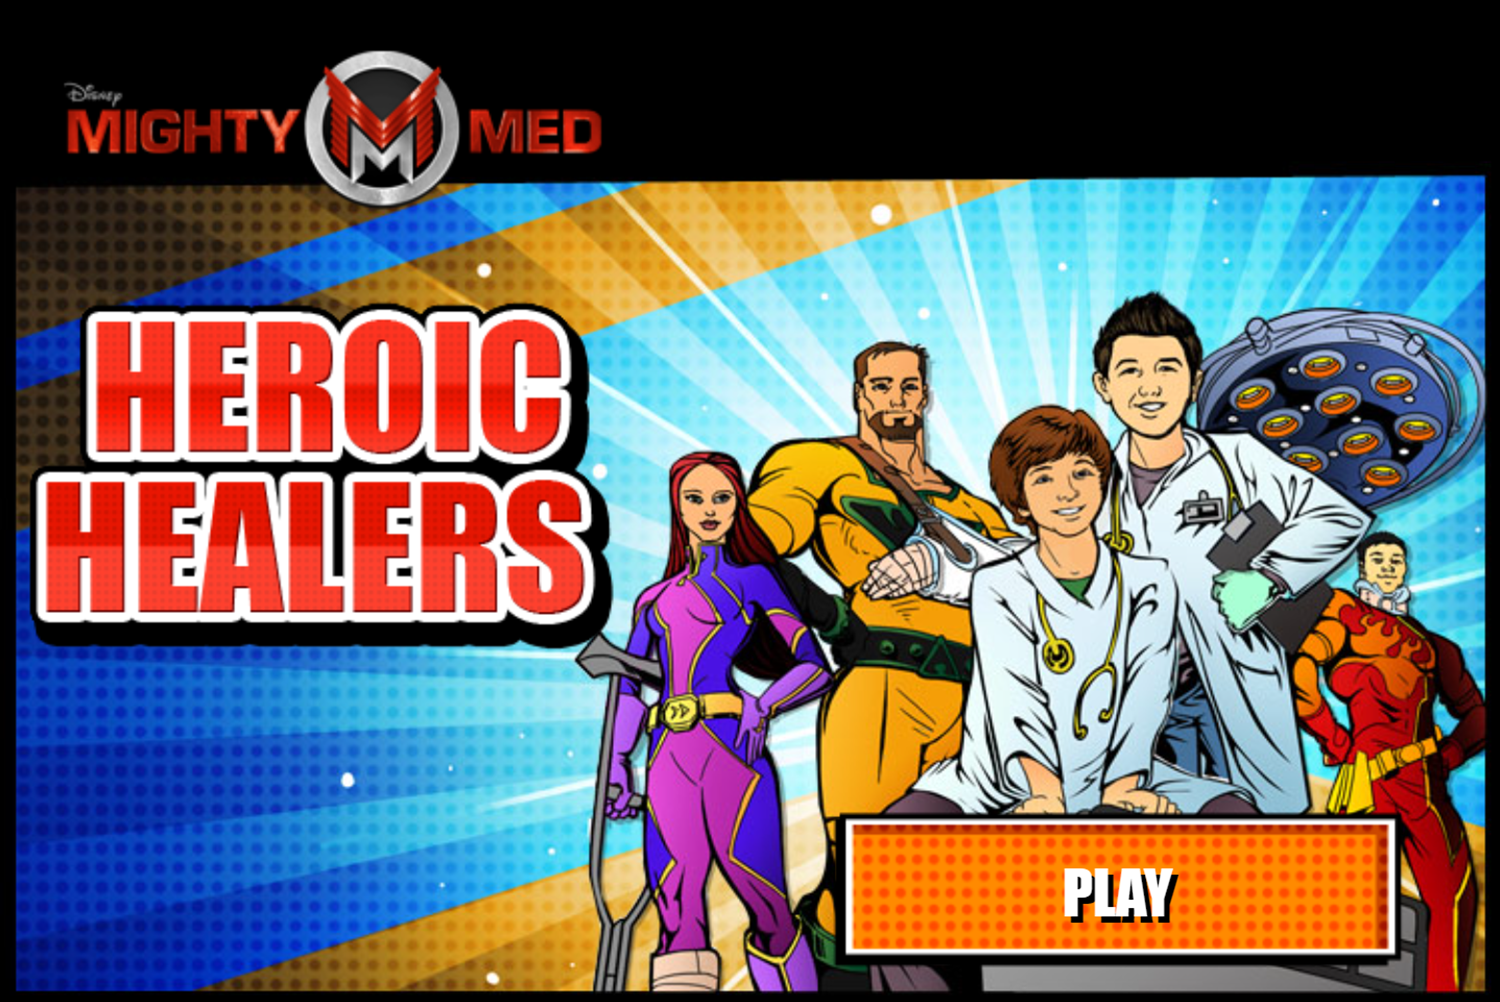 Mighty Med Heroic Healers Game Welcome Screen Screenshot.